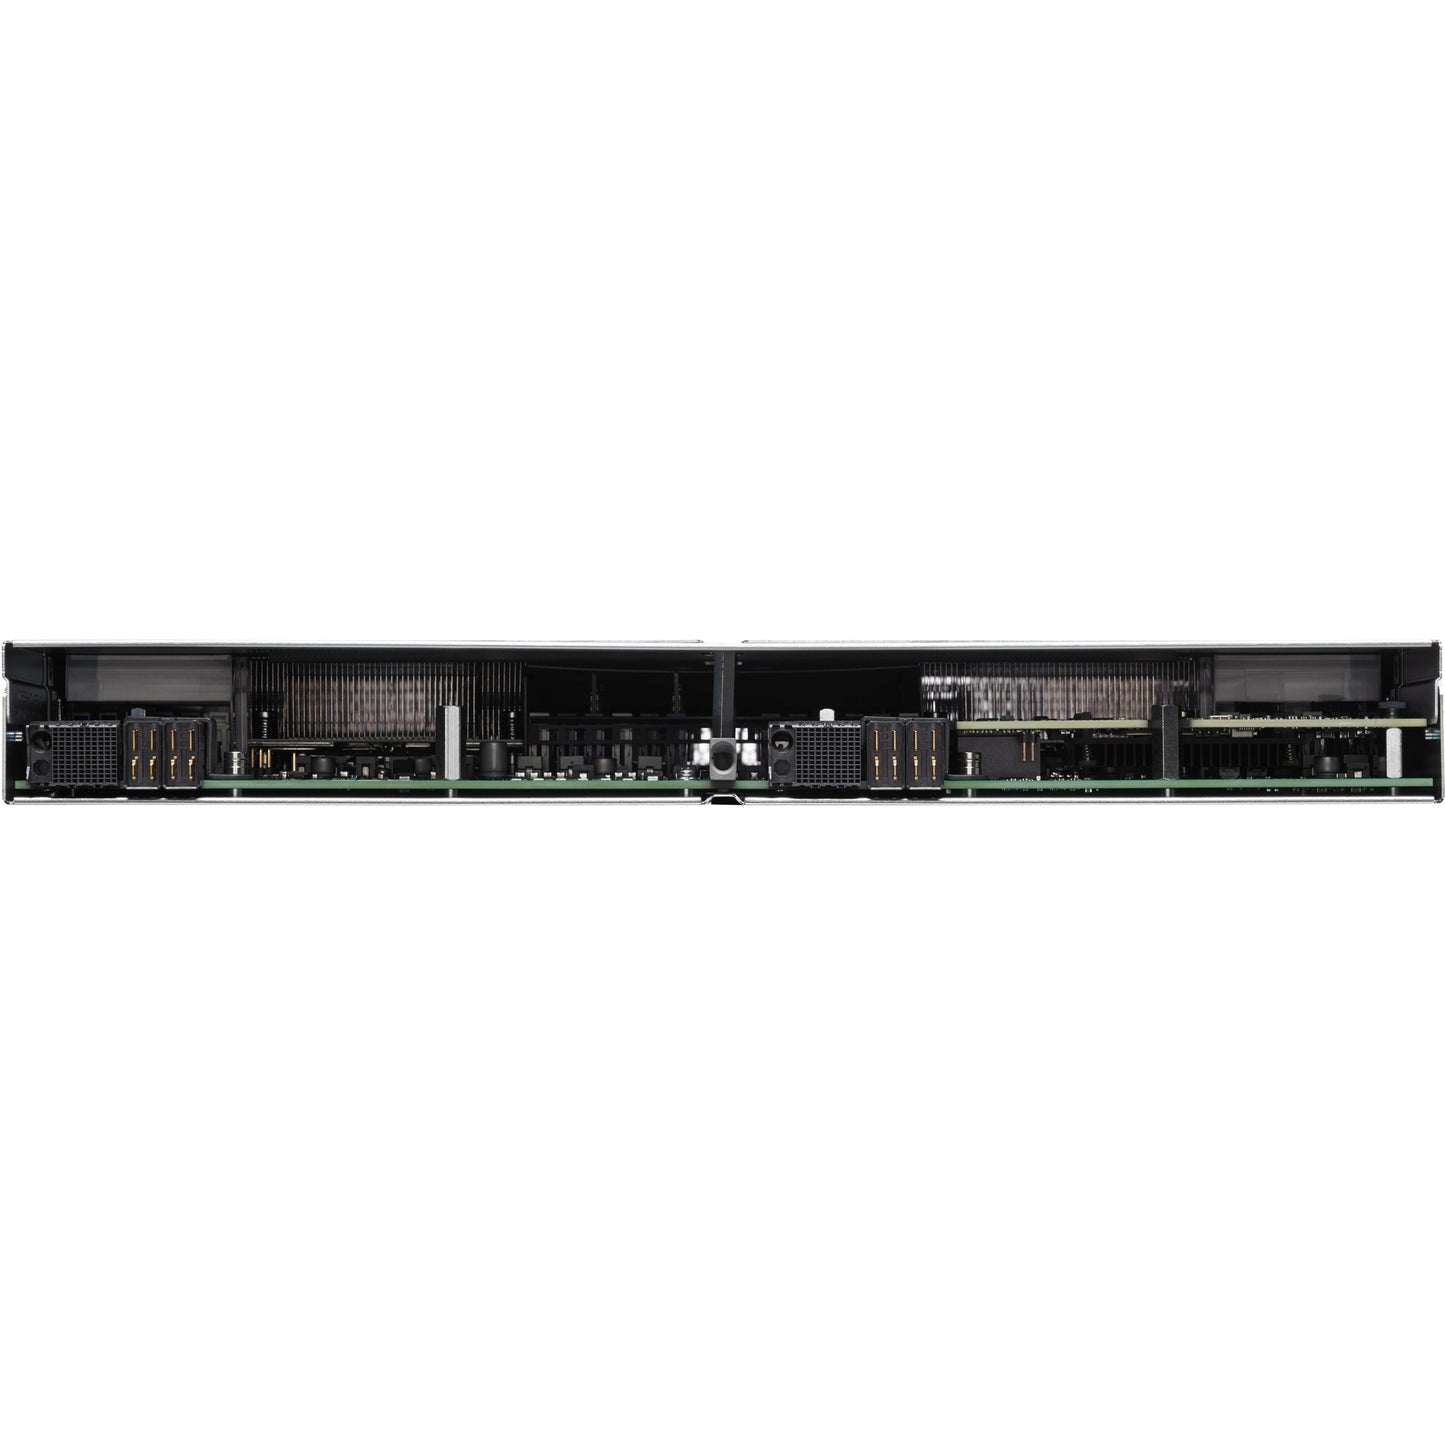 Cisco B260 M4 Blade Server - 2 x Intel Xeon E7-2880 v2 2.50 GHz - 512 GB RAM - 12Gb/s SAS Controller